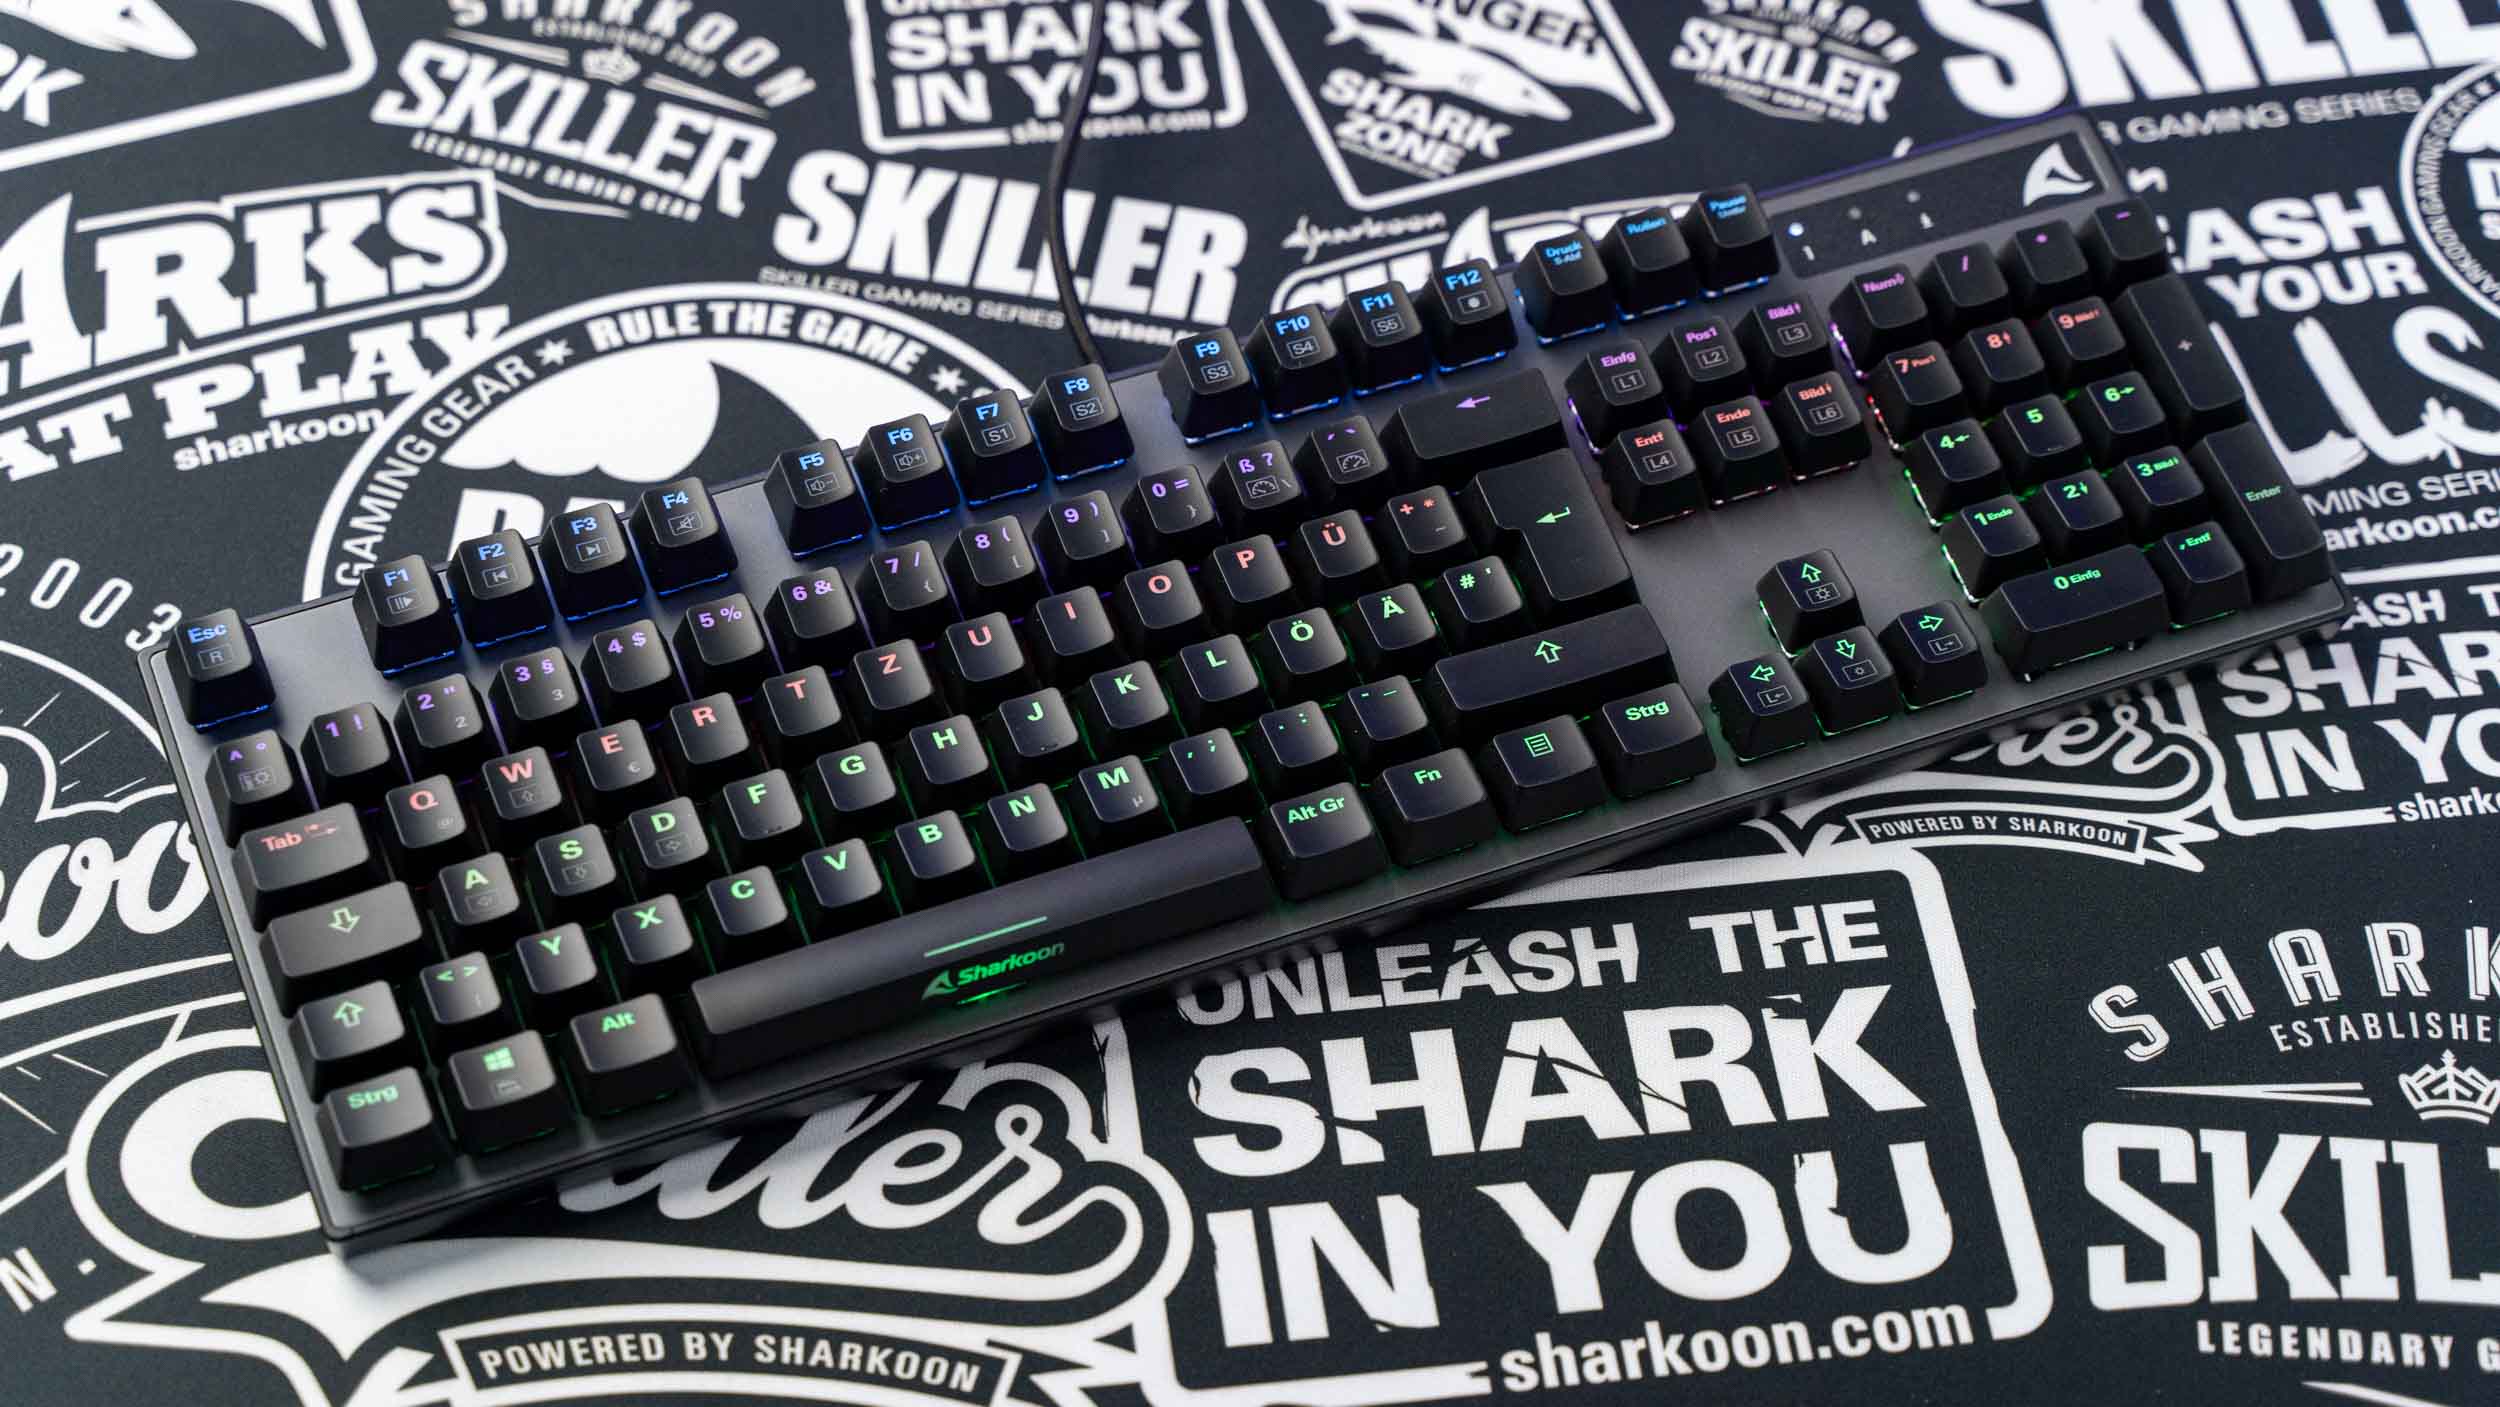 Sharkoon Skiller SGK20 Gaming-Tastatur auf Sharkoon-Mauspad